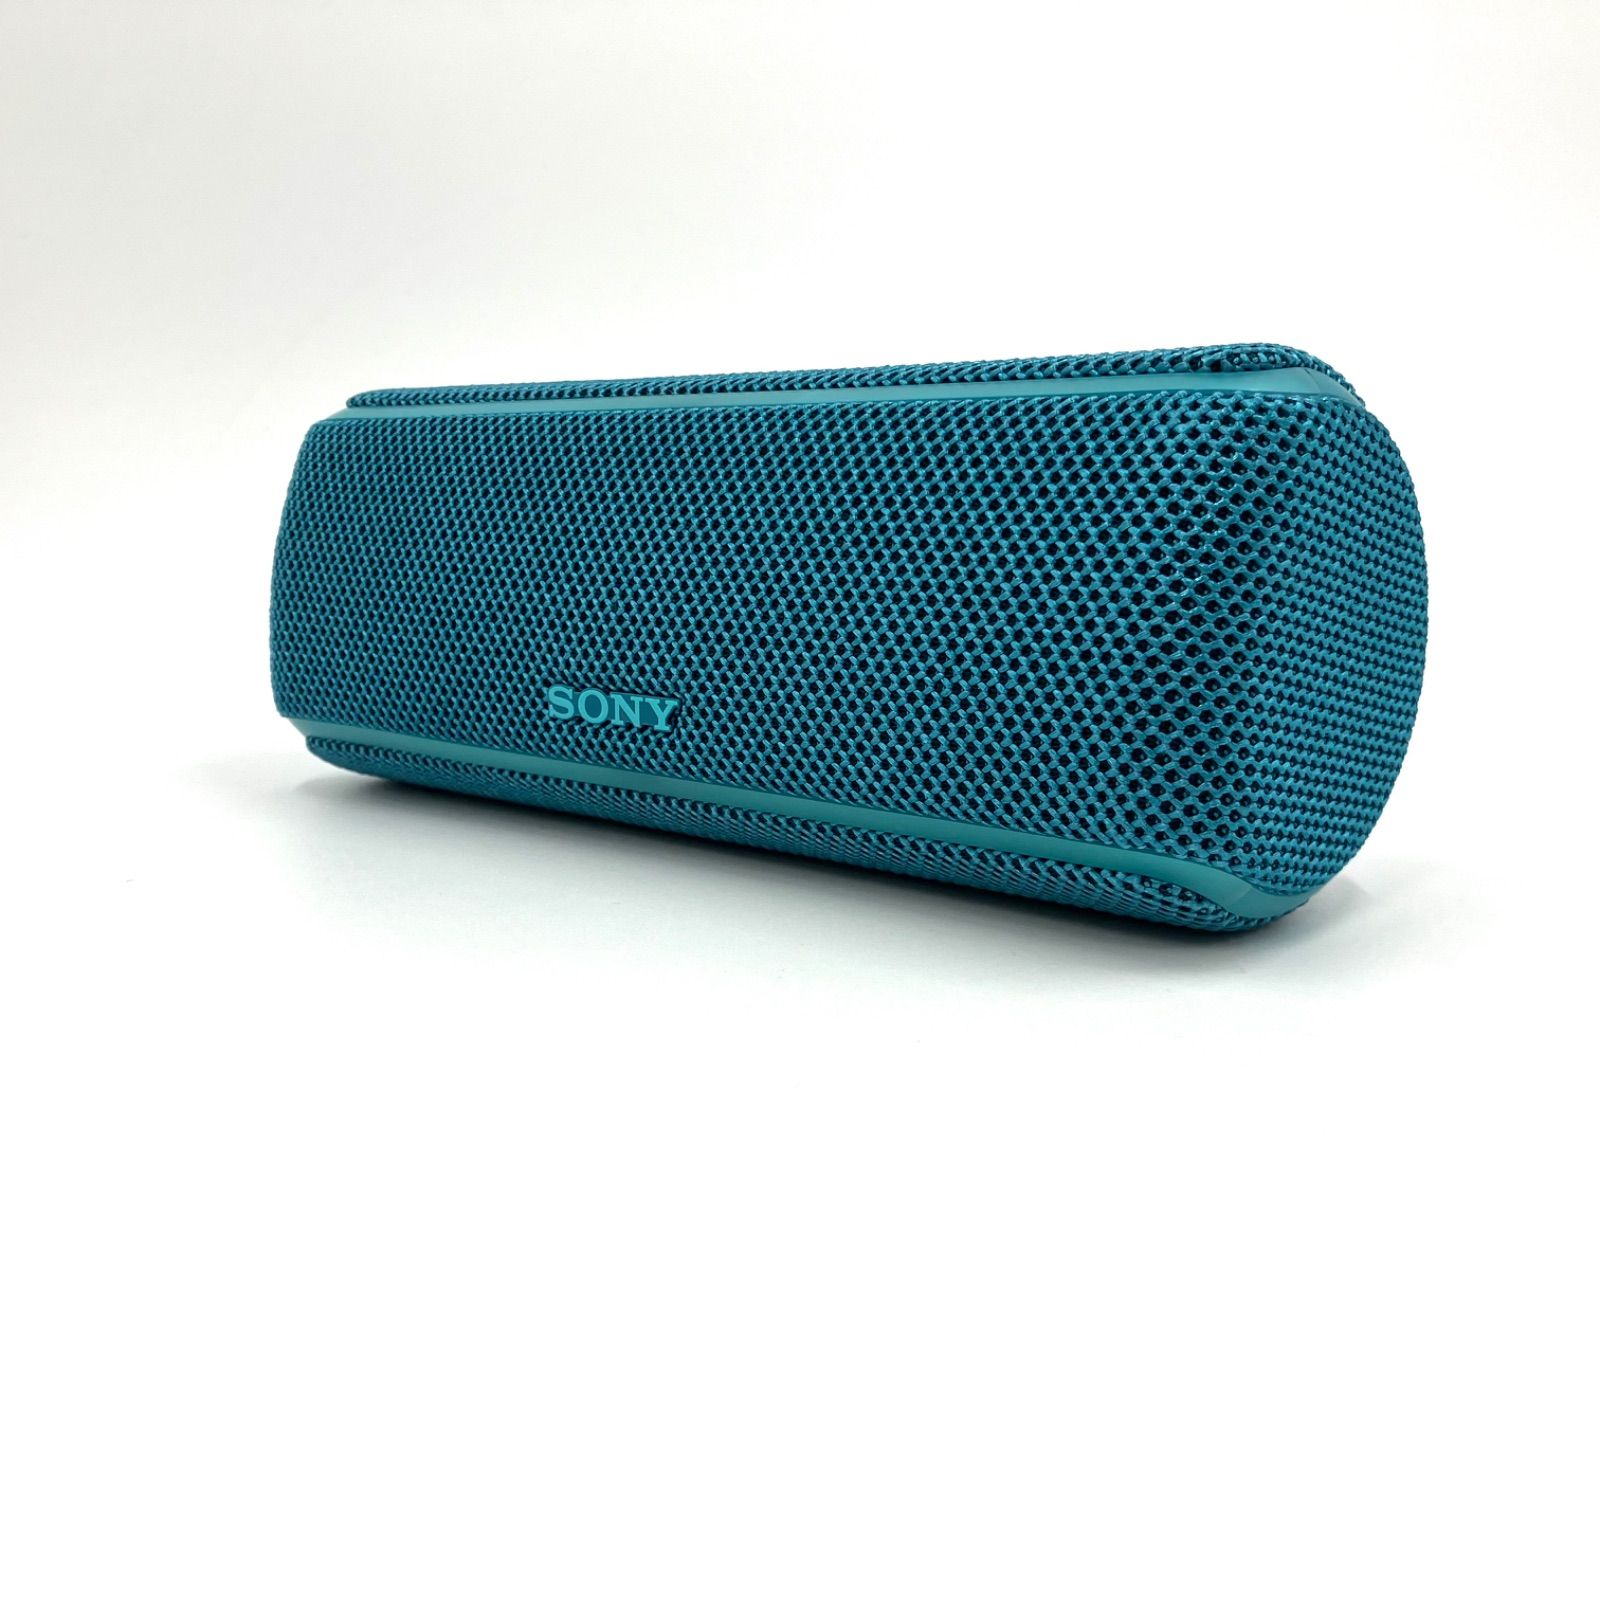 248776】Sony ワイヤレスポータブルスピーカー SRS-XB21 Bluetooth